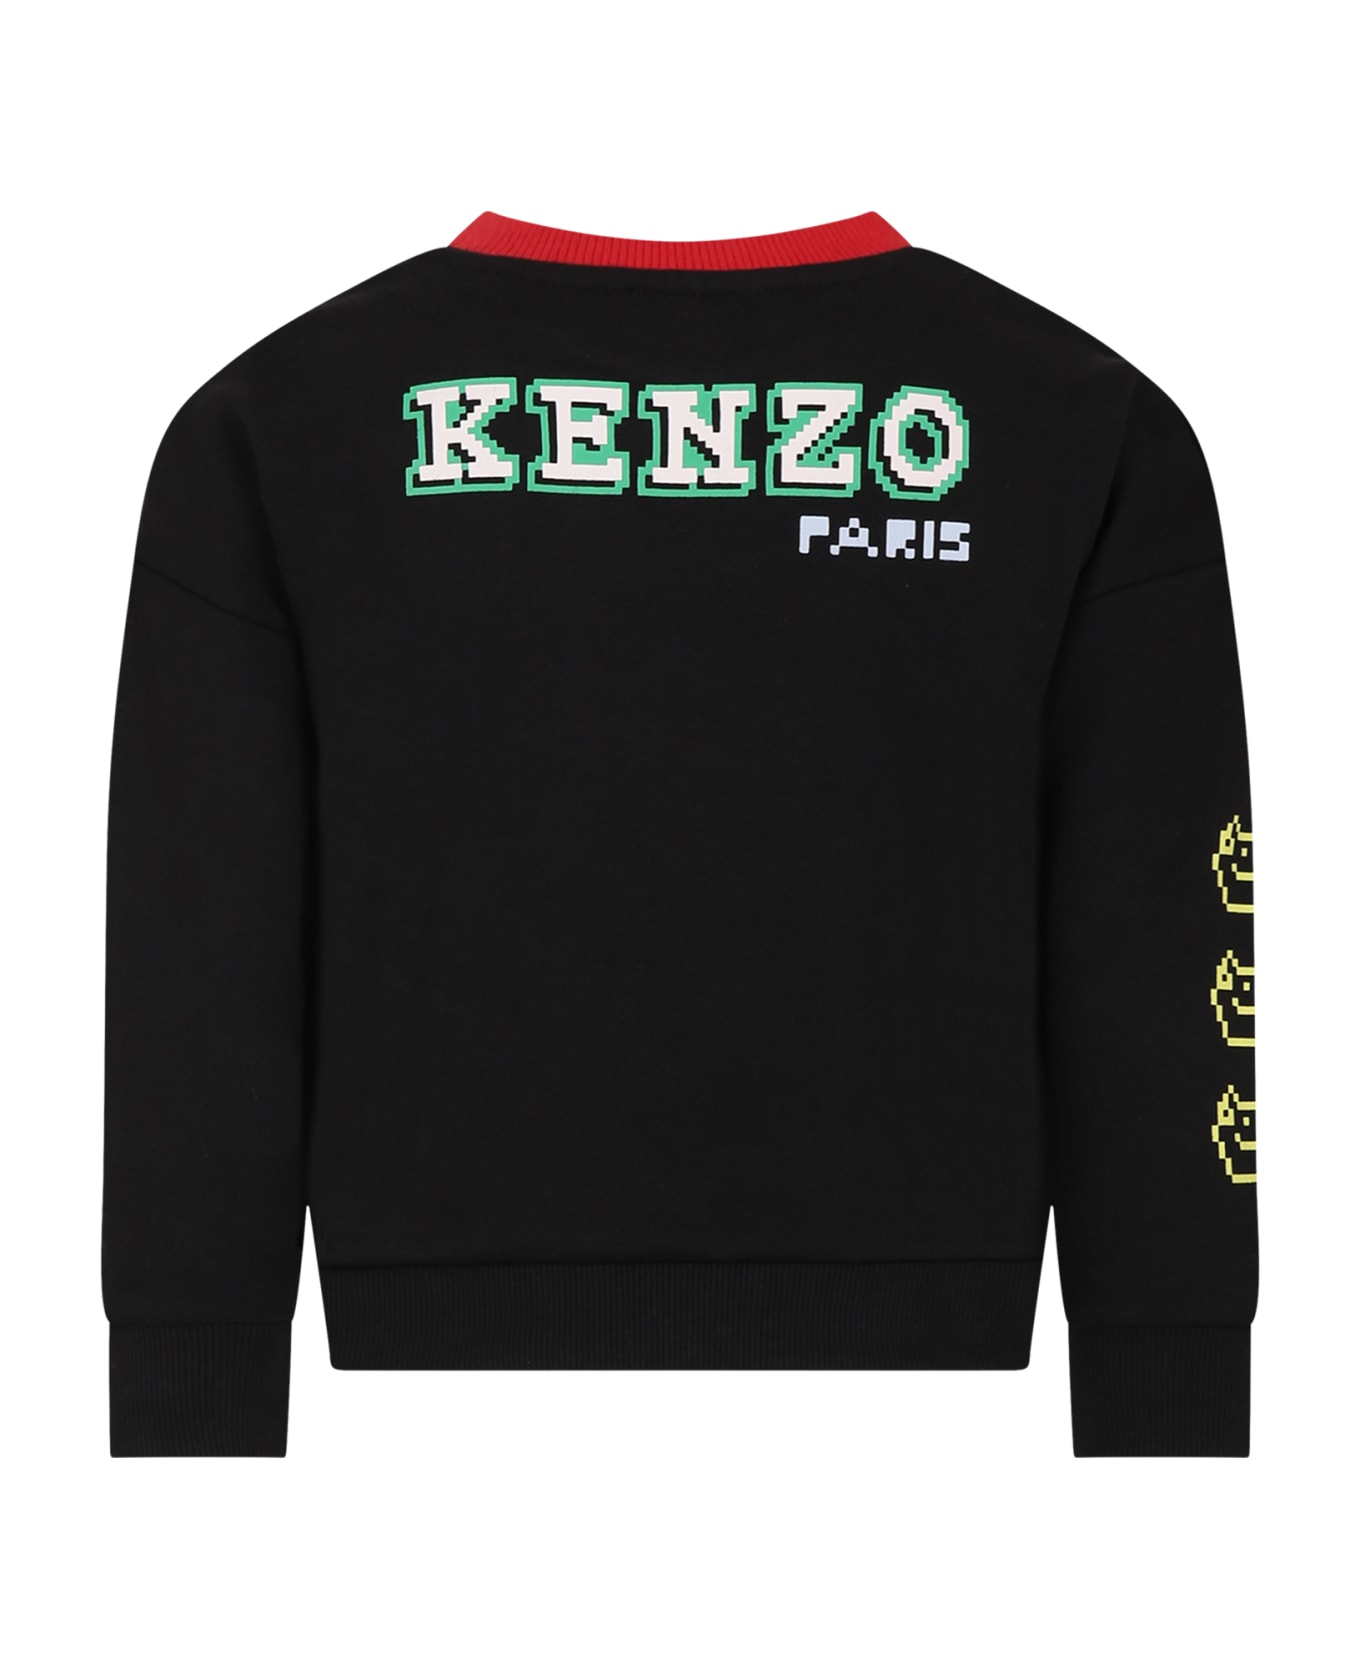 Kenzo Kids Black Sweatshirt For Boy With Animals And Logo - Black